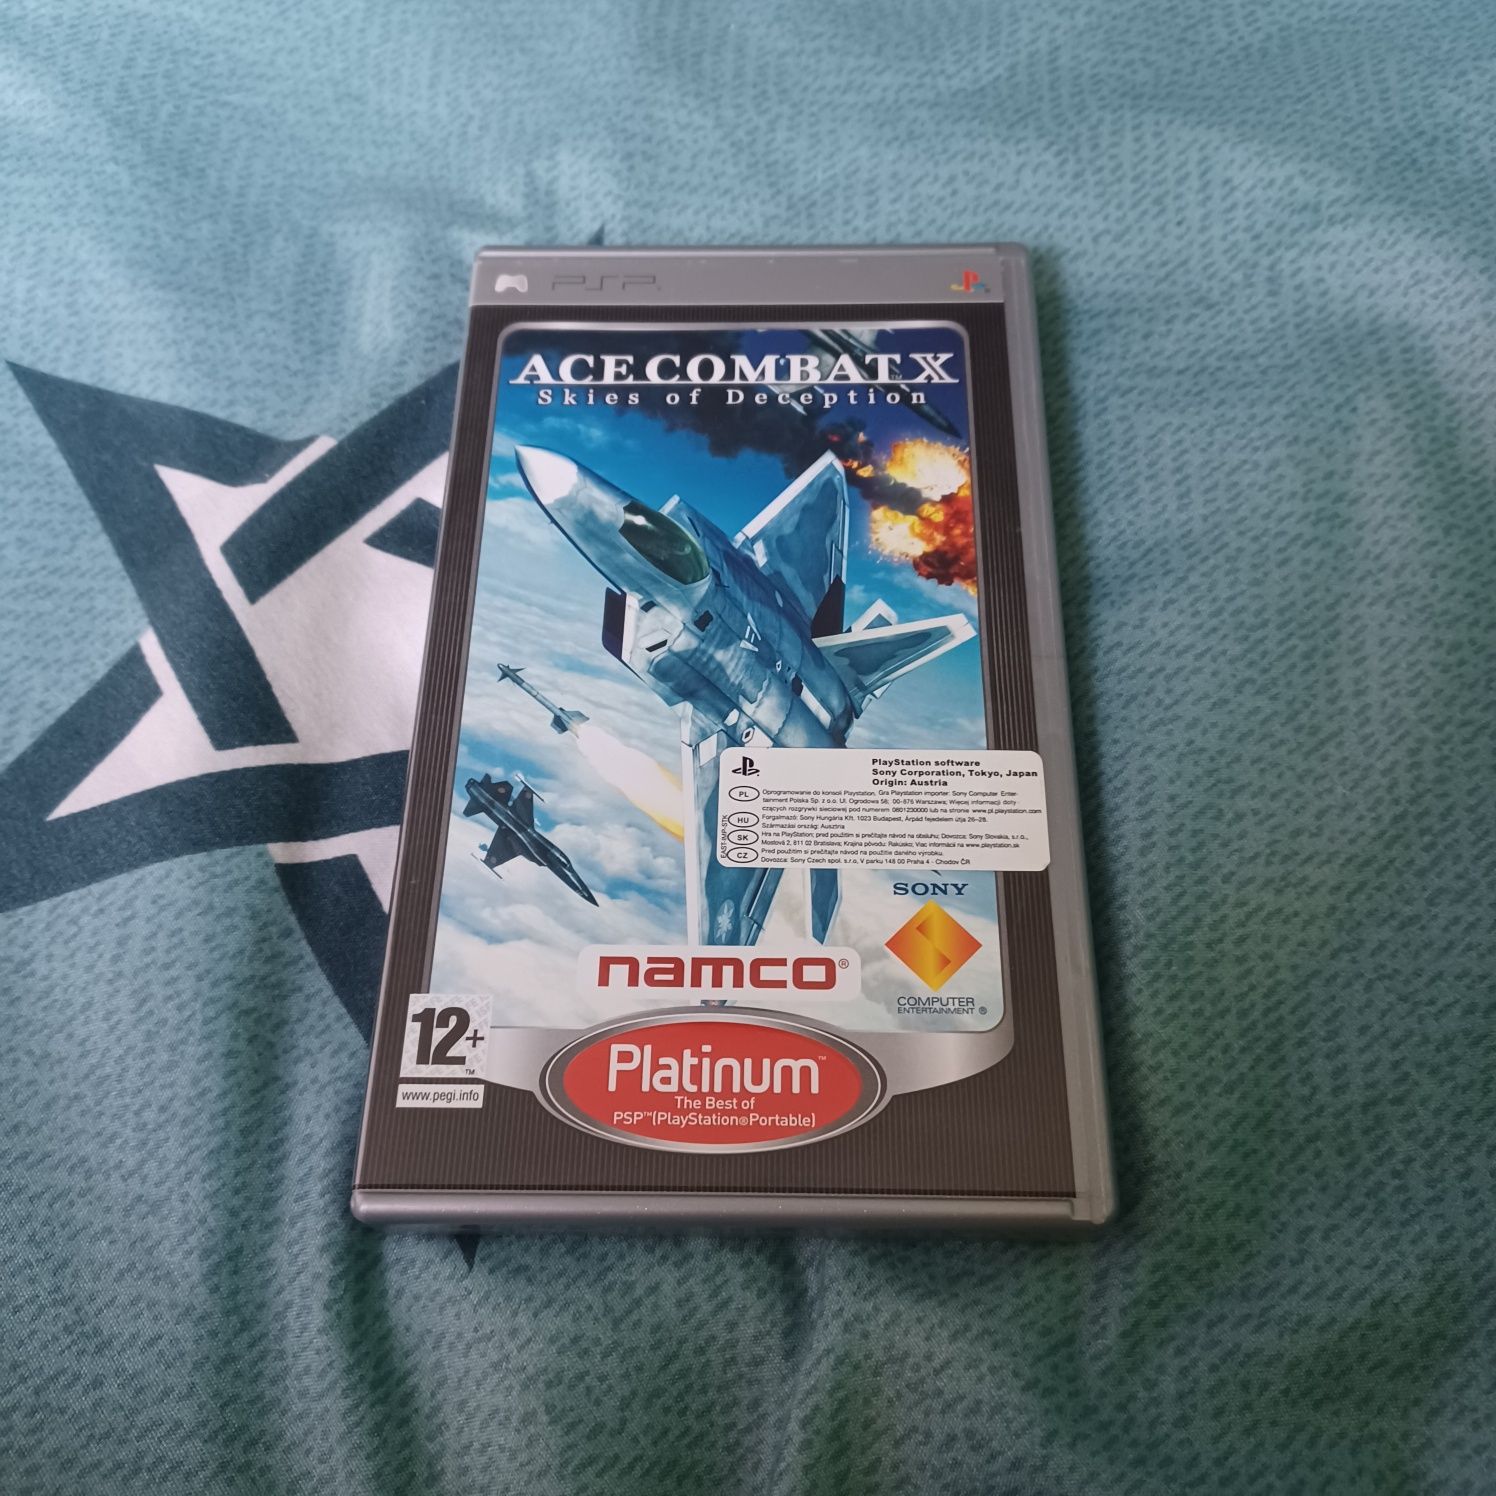 Gra Ace Combat X na PSP